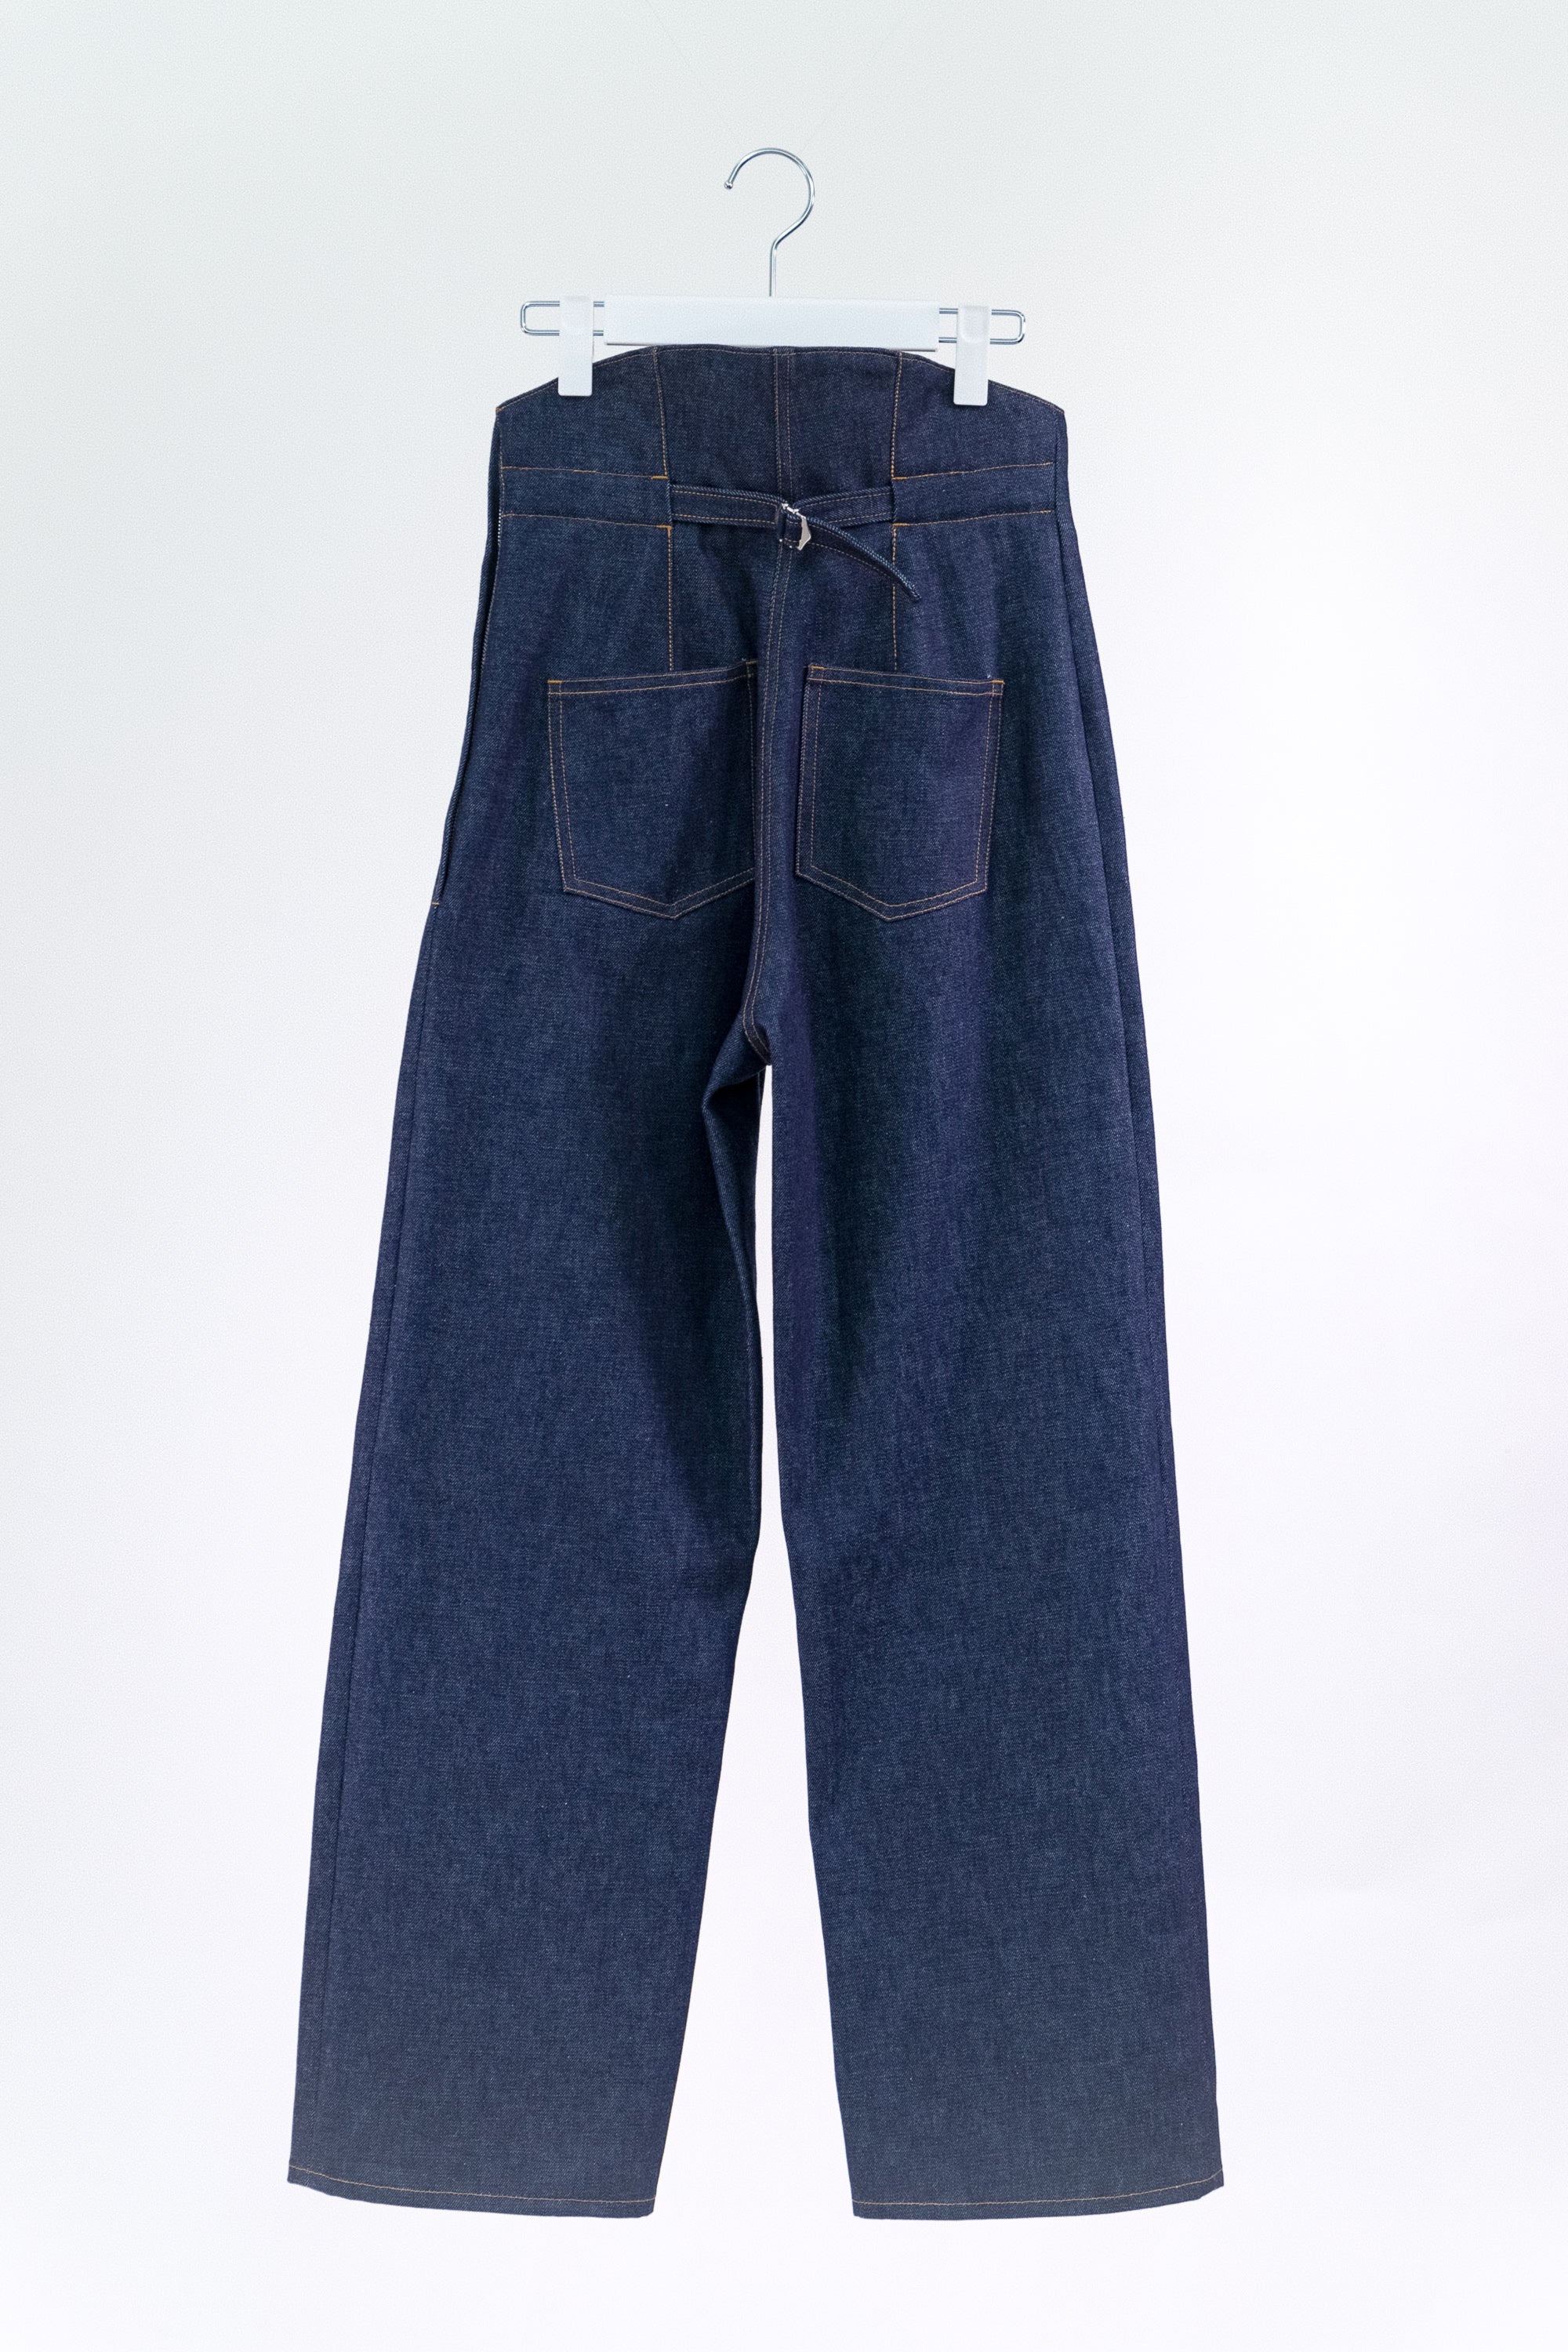 YOHEI OHNO High Waist Denim Pants /size1-